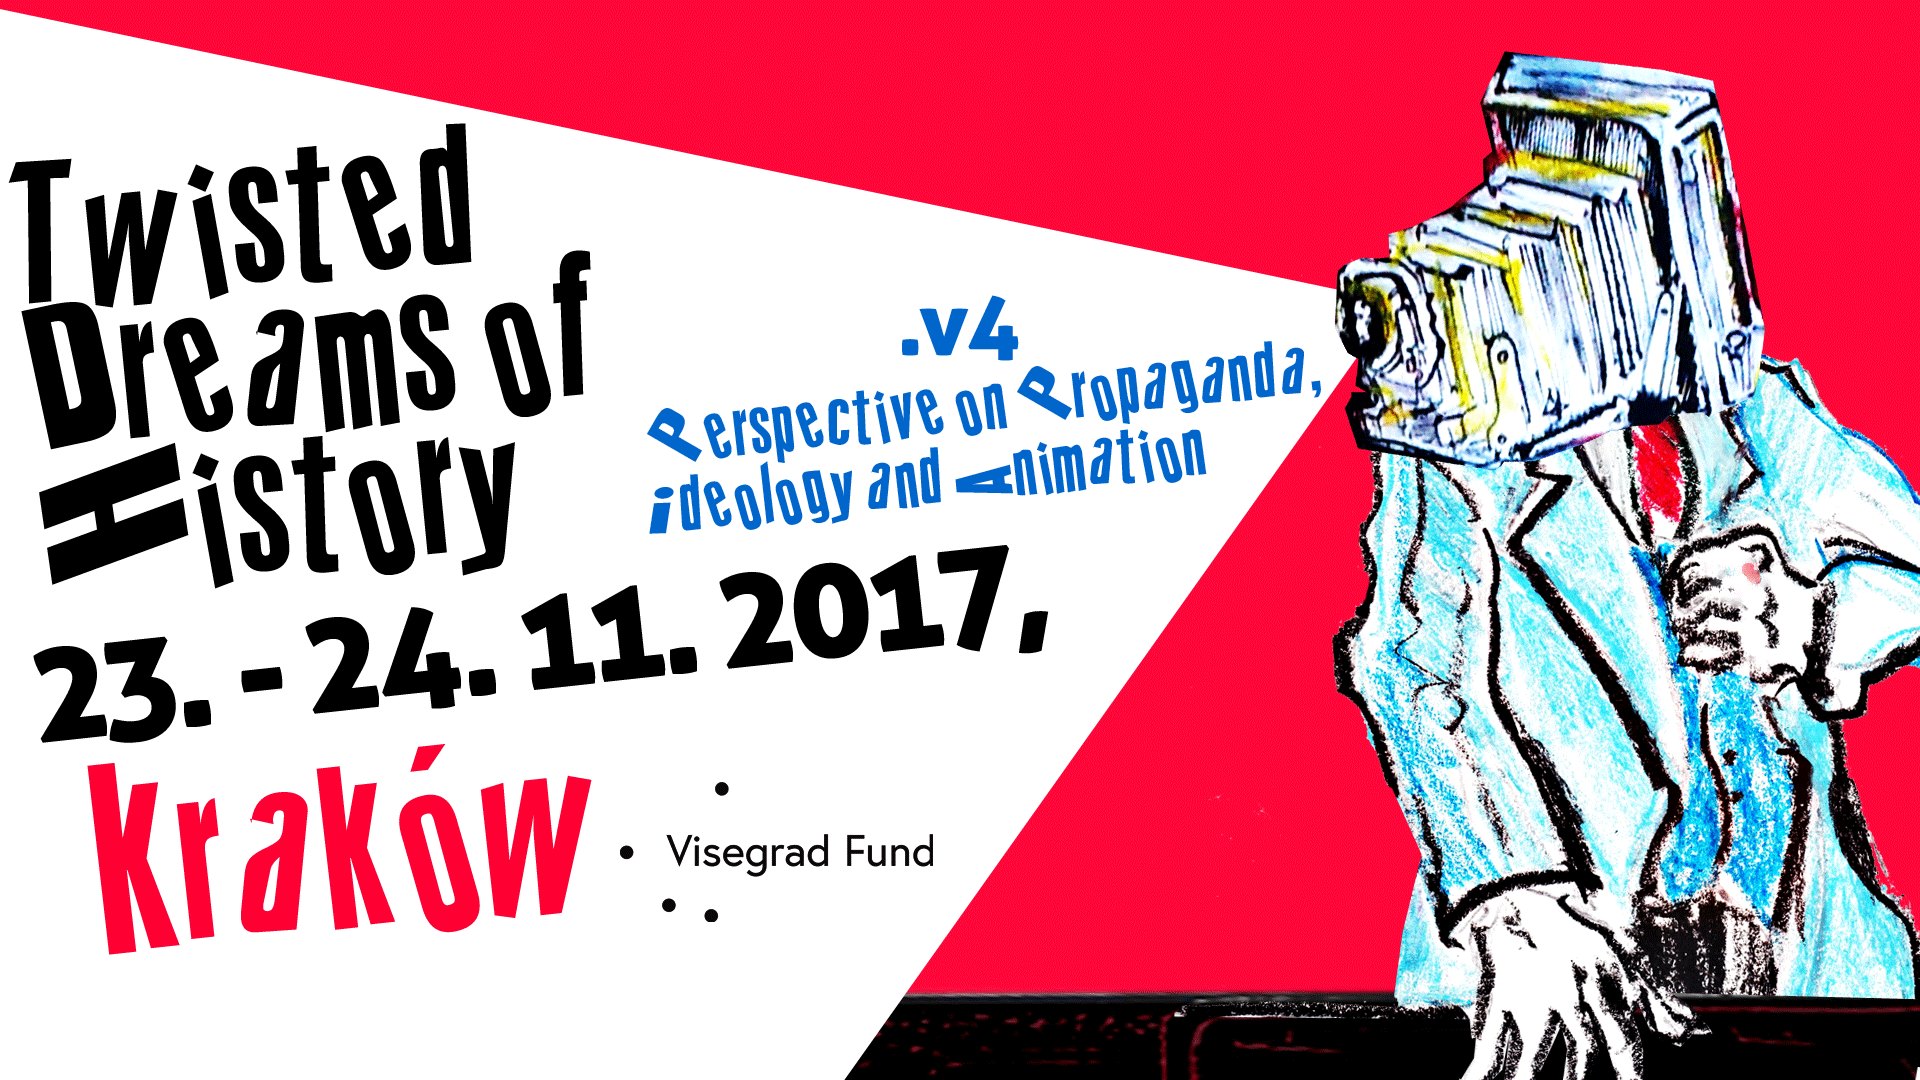 Propaganda, Ideology and Animation Conference, 23-24/11, Krakow: Full Programme